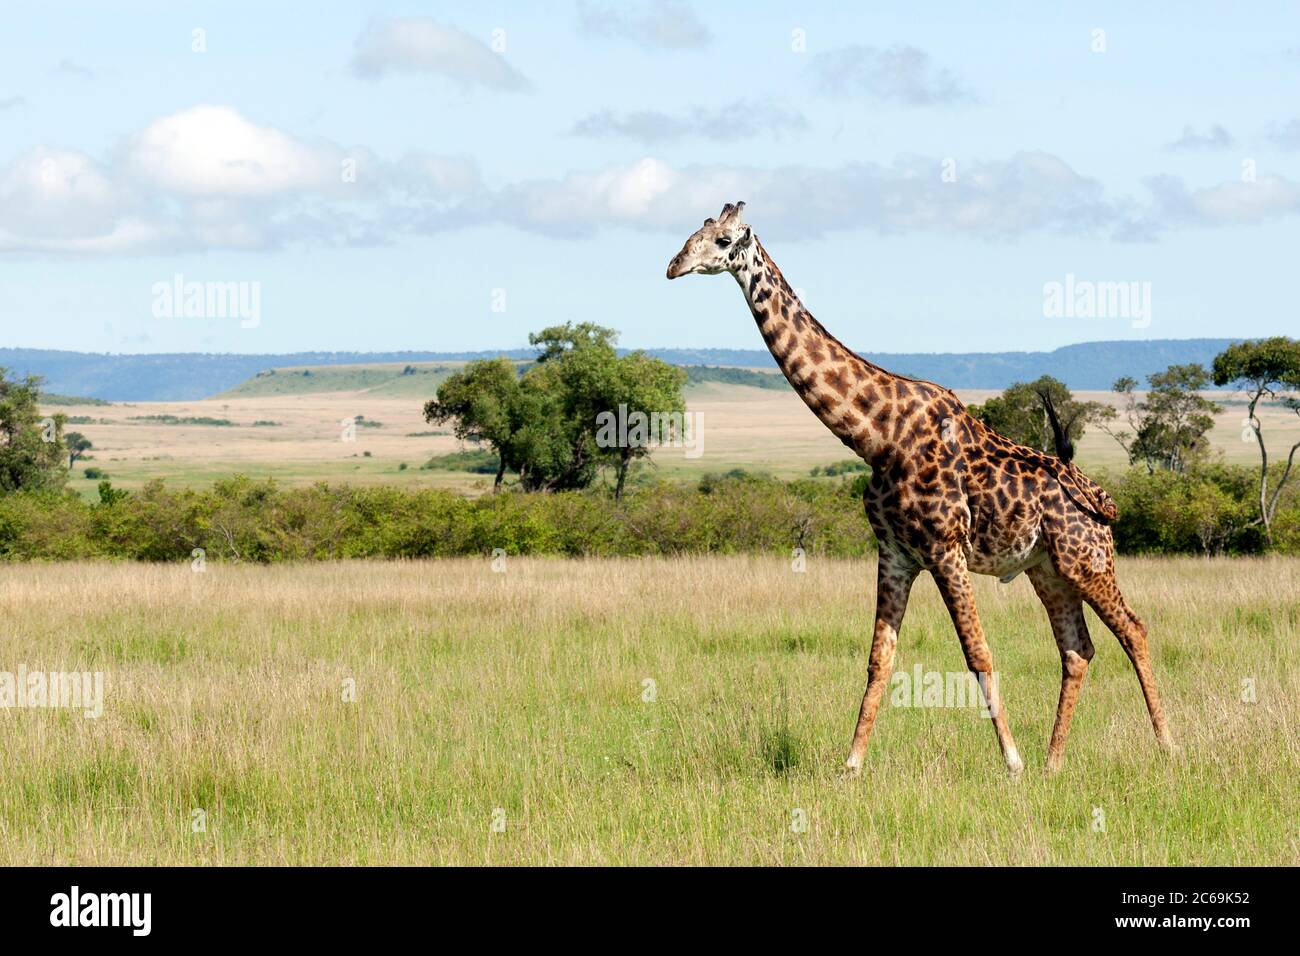 Giraffe (Giraffa camelopardalis), Stier auf Gras, Seitenansicht, Kenia, Masai Mara Nationalpark Stockfoto